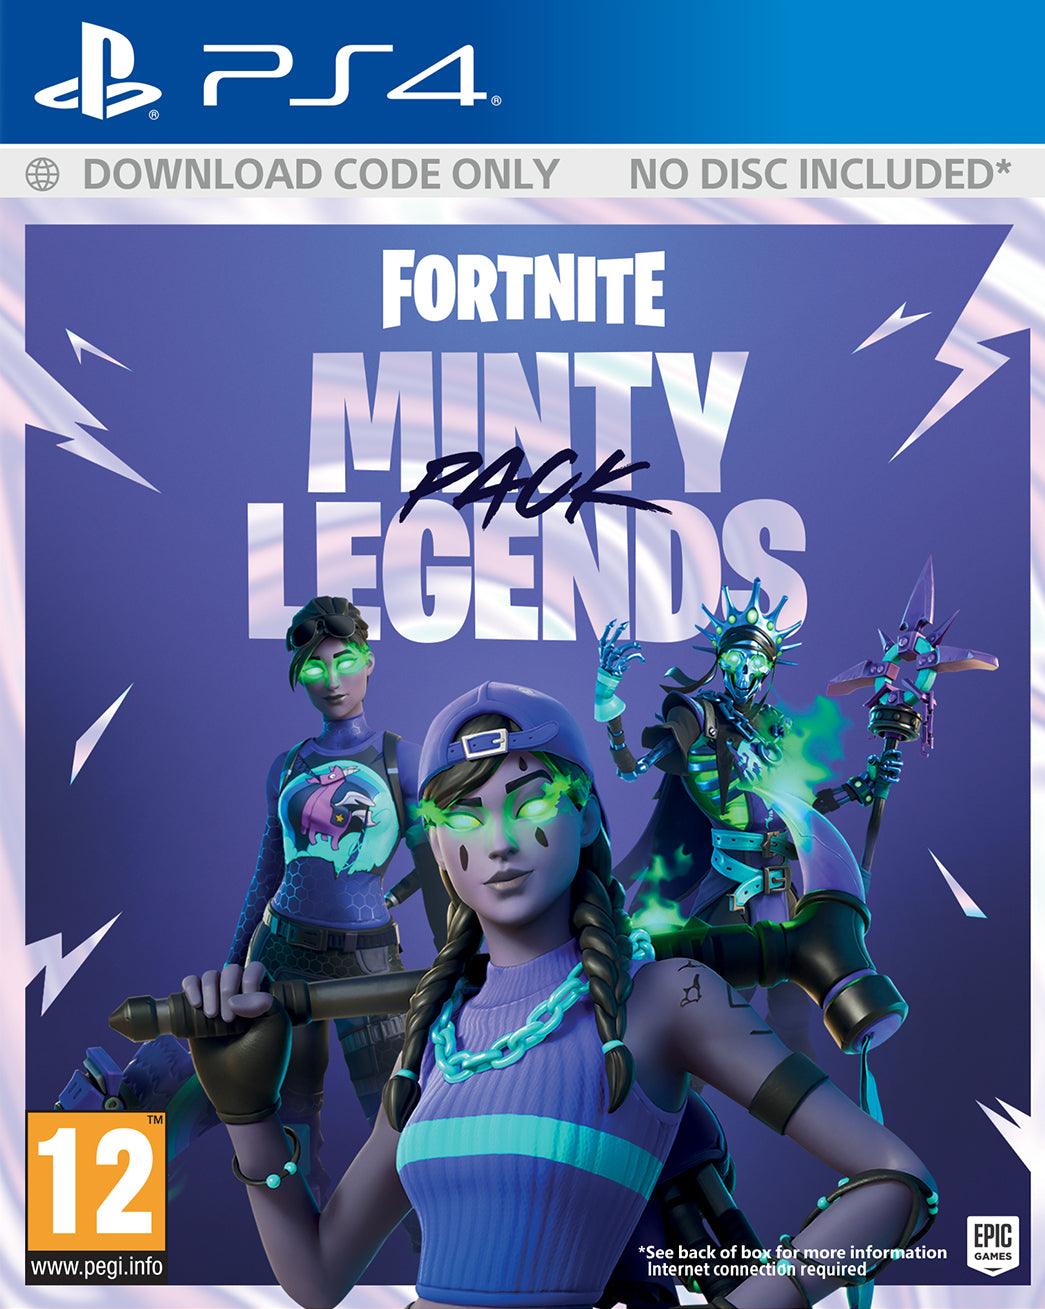 Fortnite Minty Legends Pack - Want a New Gadget